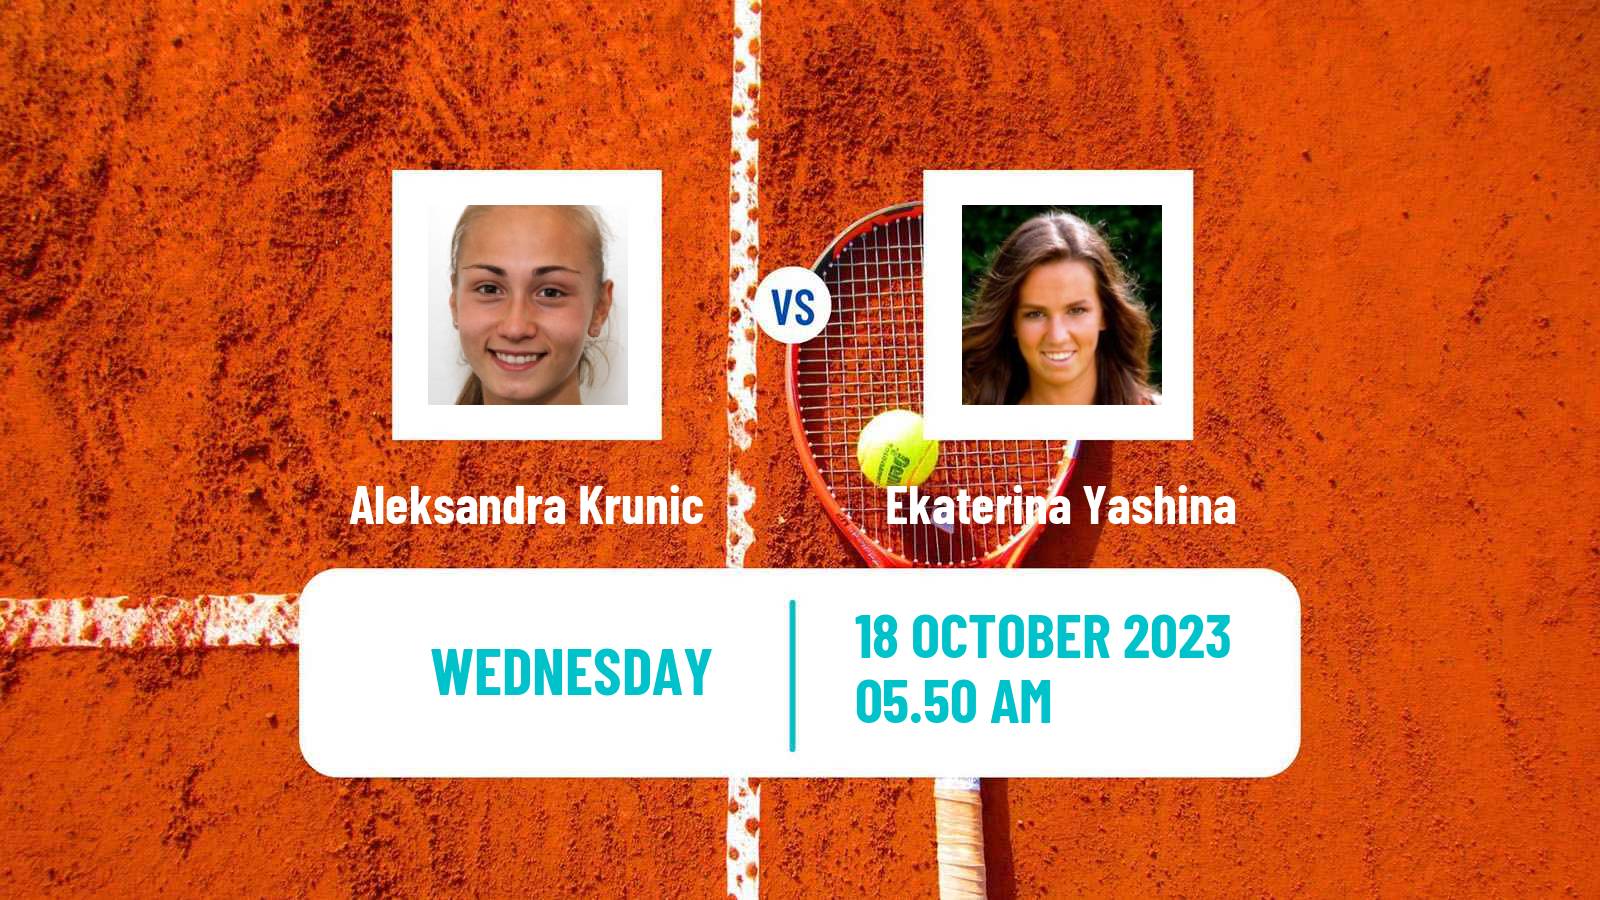 Tennis ITF W60 Hamburg Women Aleksandra Krunic - Ekaterina Yashina